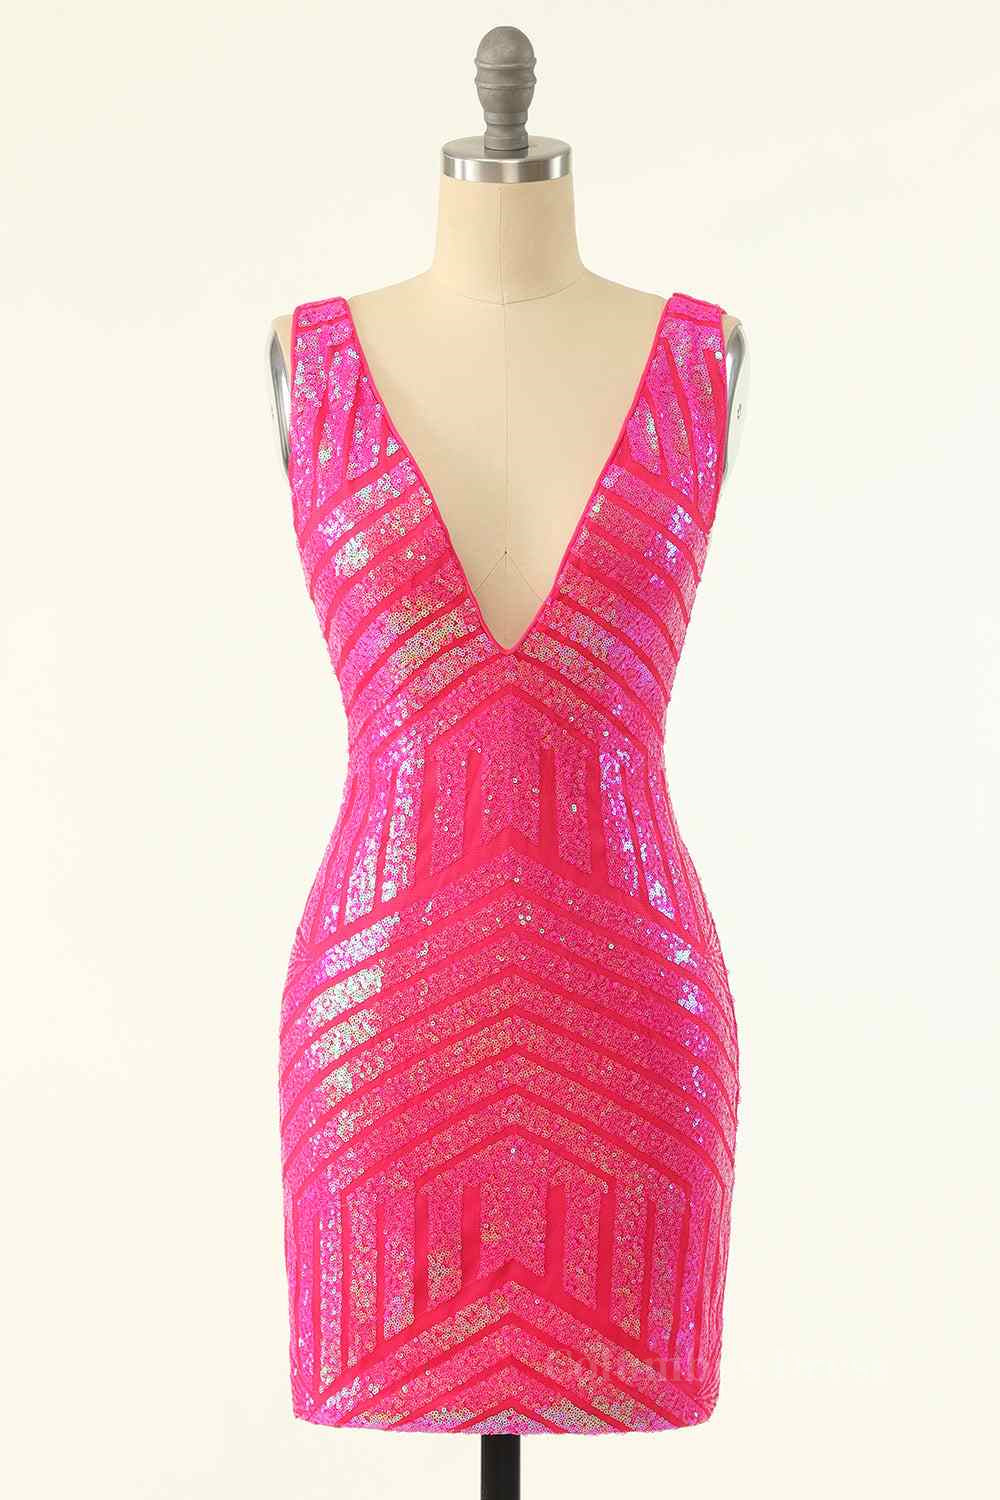 Formal Dress Websites, Hot Pink Sheath V Neck Sequin-Embroidered Mini Homecoming Dress